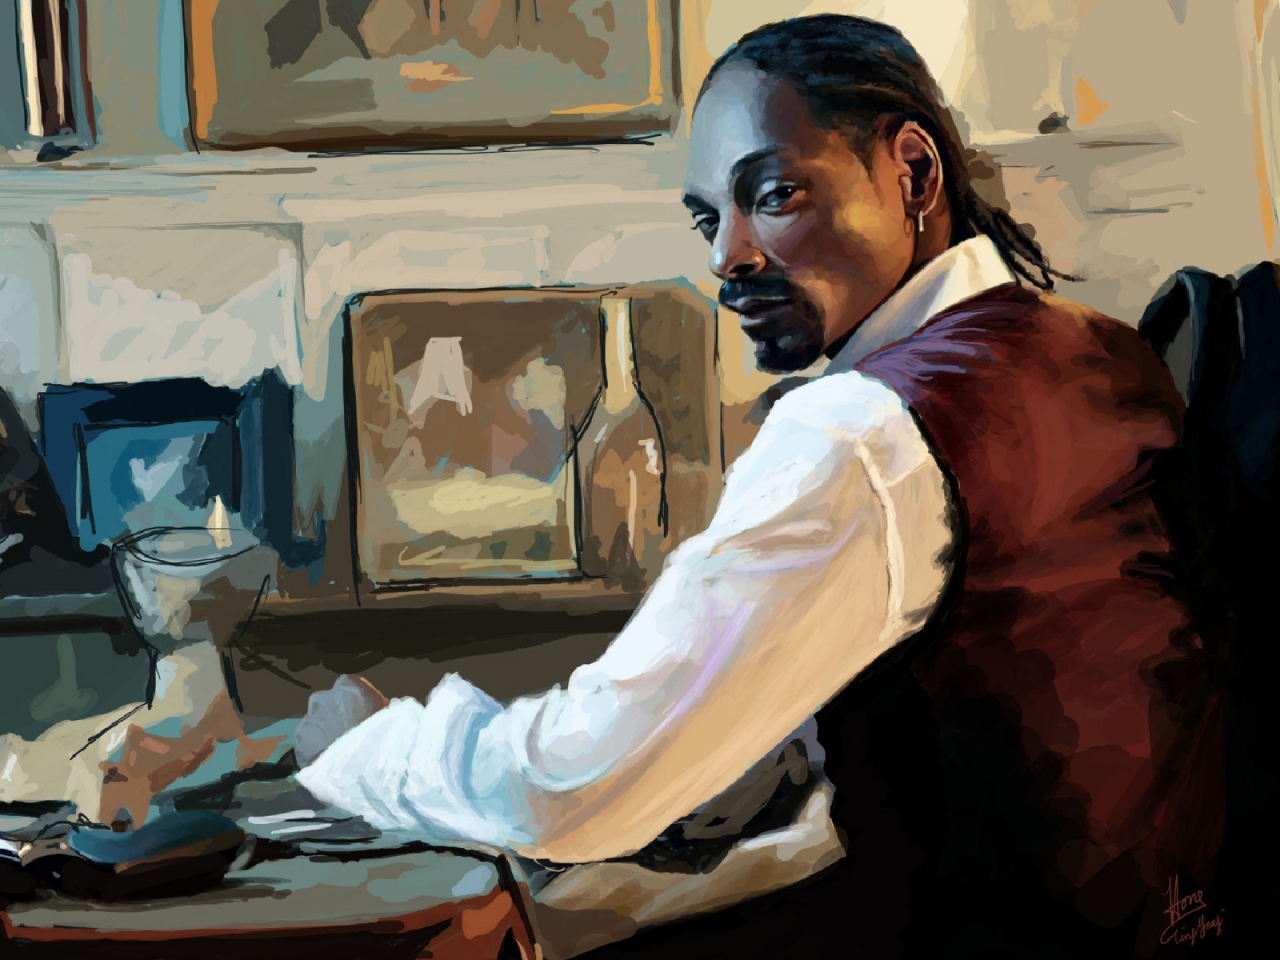 Snoop Dogg Artwork for 1280 x 960 resolution